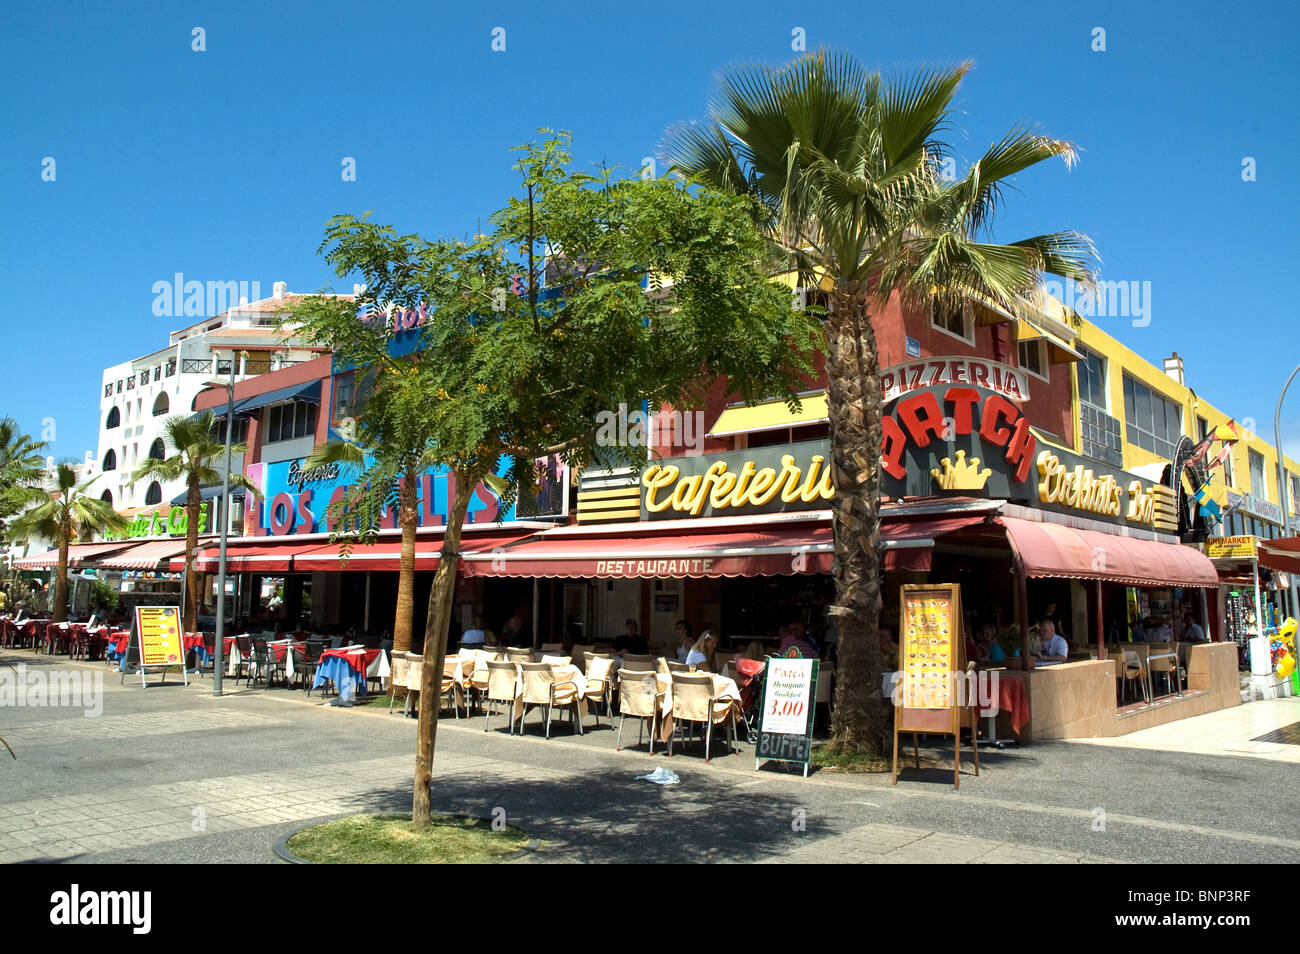 Playa de las americas tenerife bar hi-res stock photography and images -  Alamy